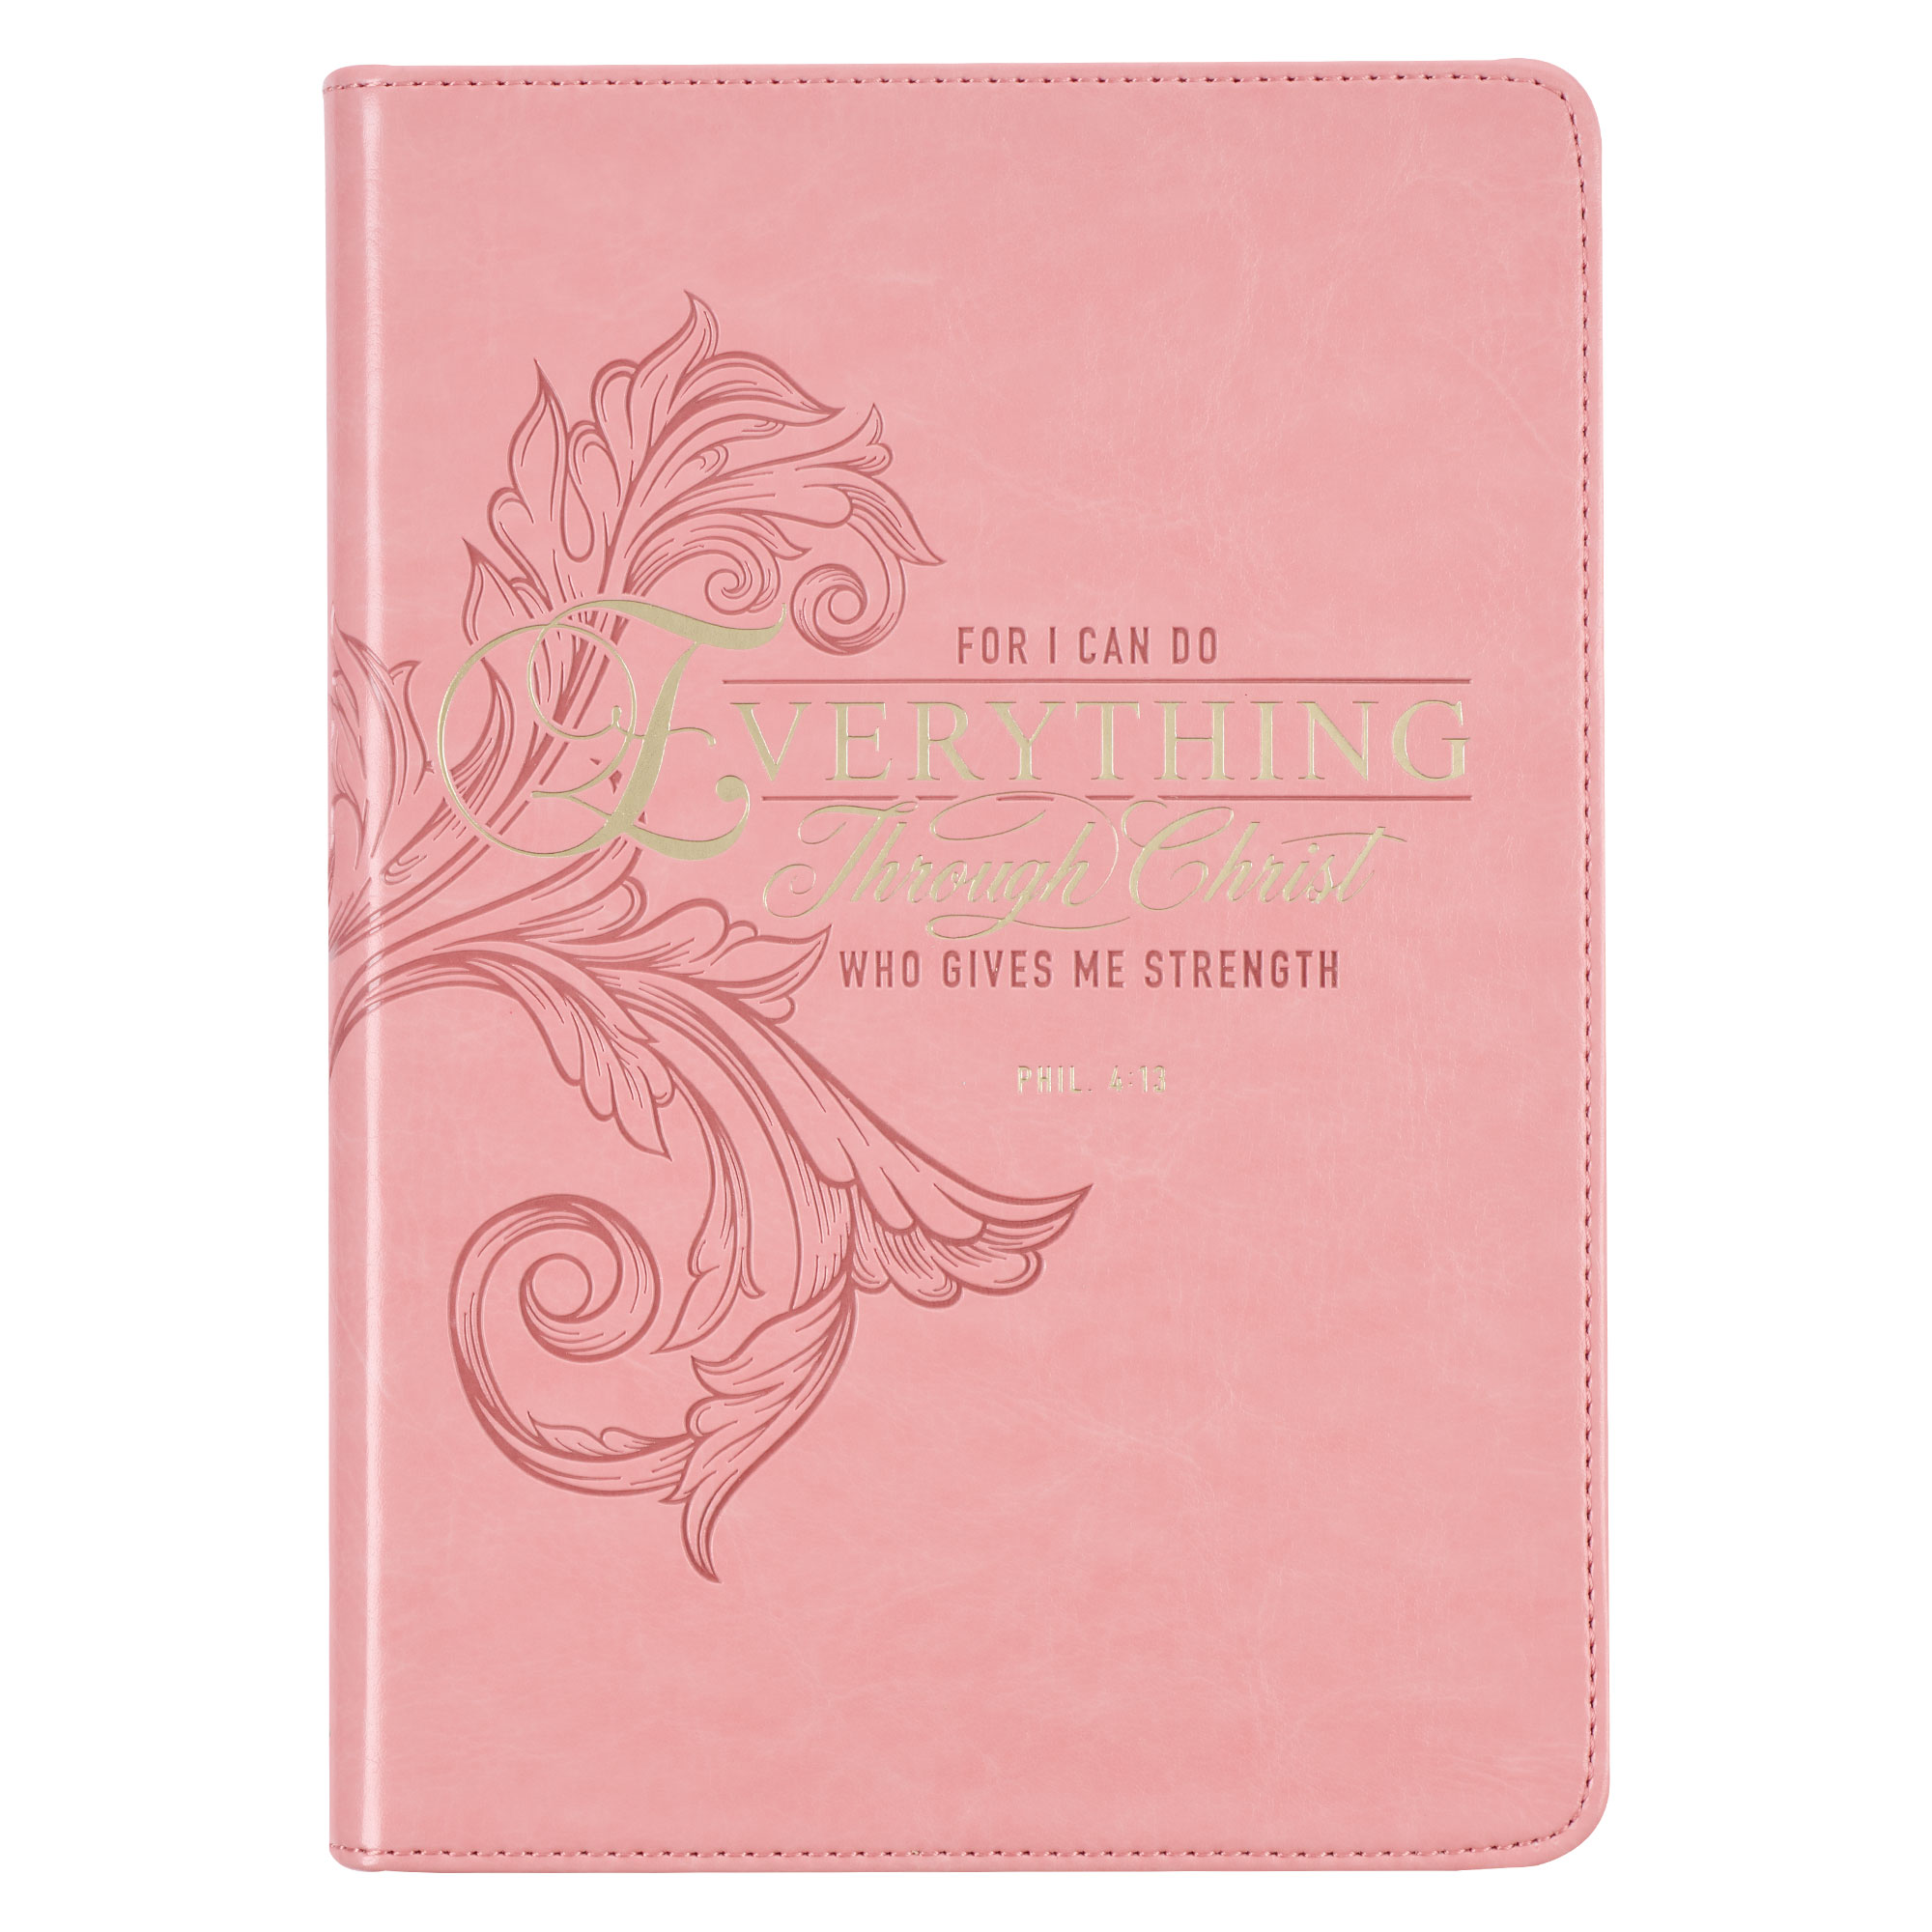 New Bible study supplies 💓 #cute#pink#aesthetic#christianitytiktok#cu, bible study